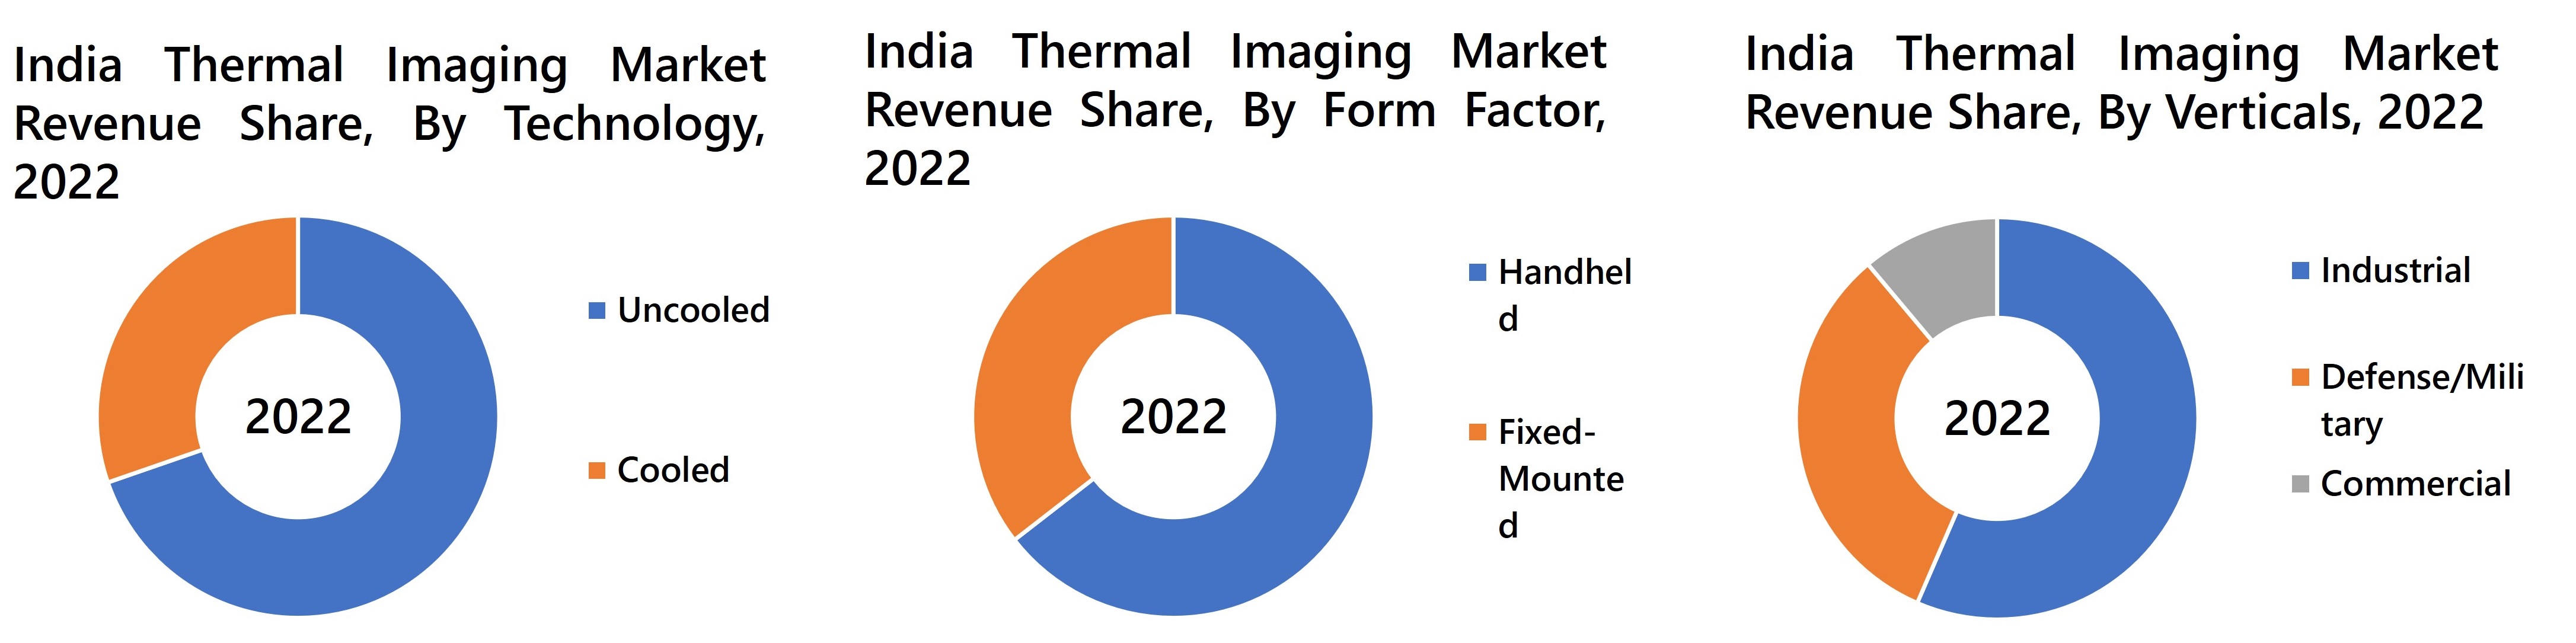 India Thermal Imaging Market